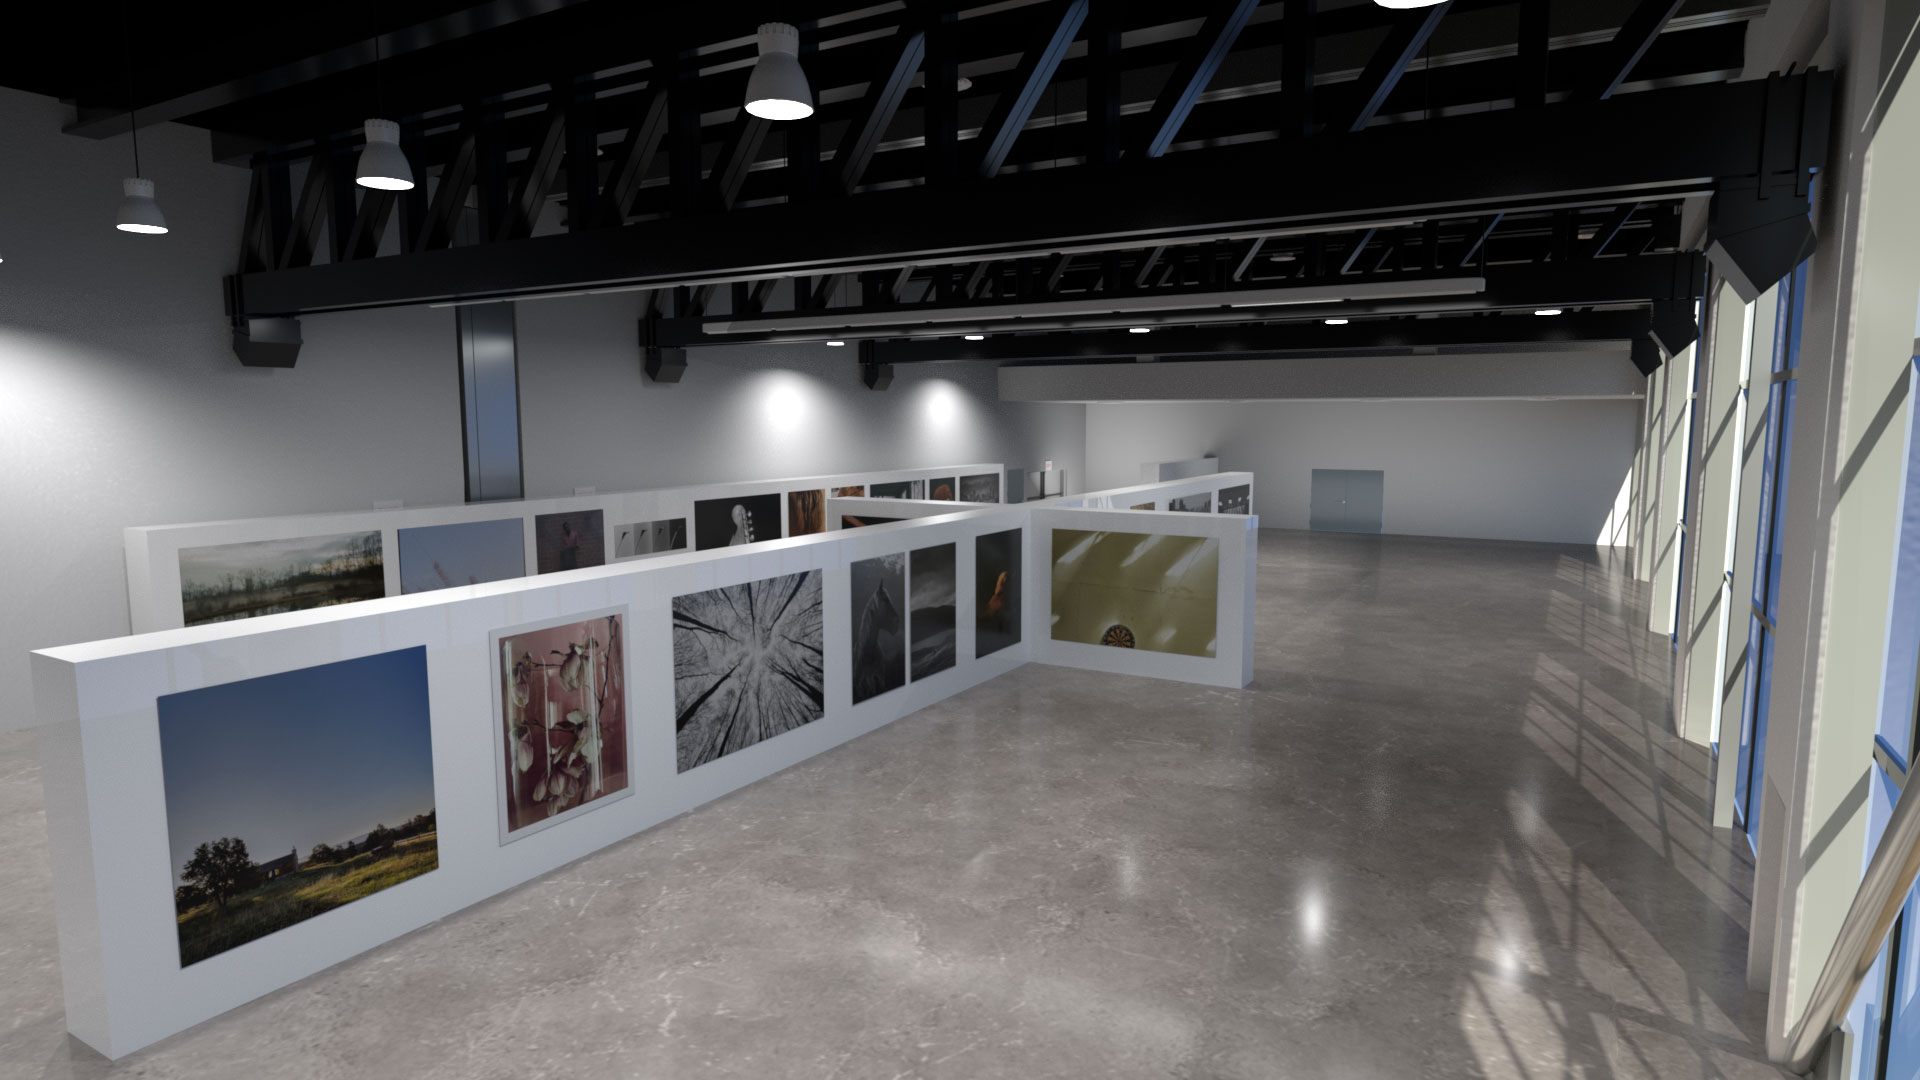 Spring Studios' virtual gallery